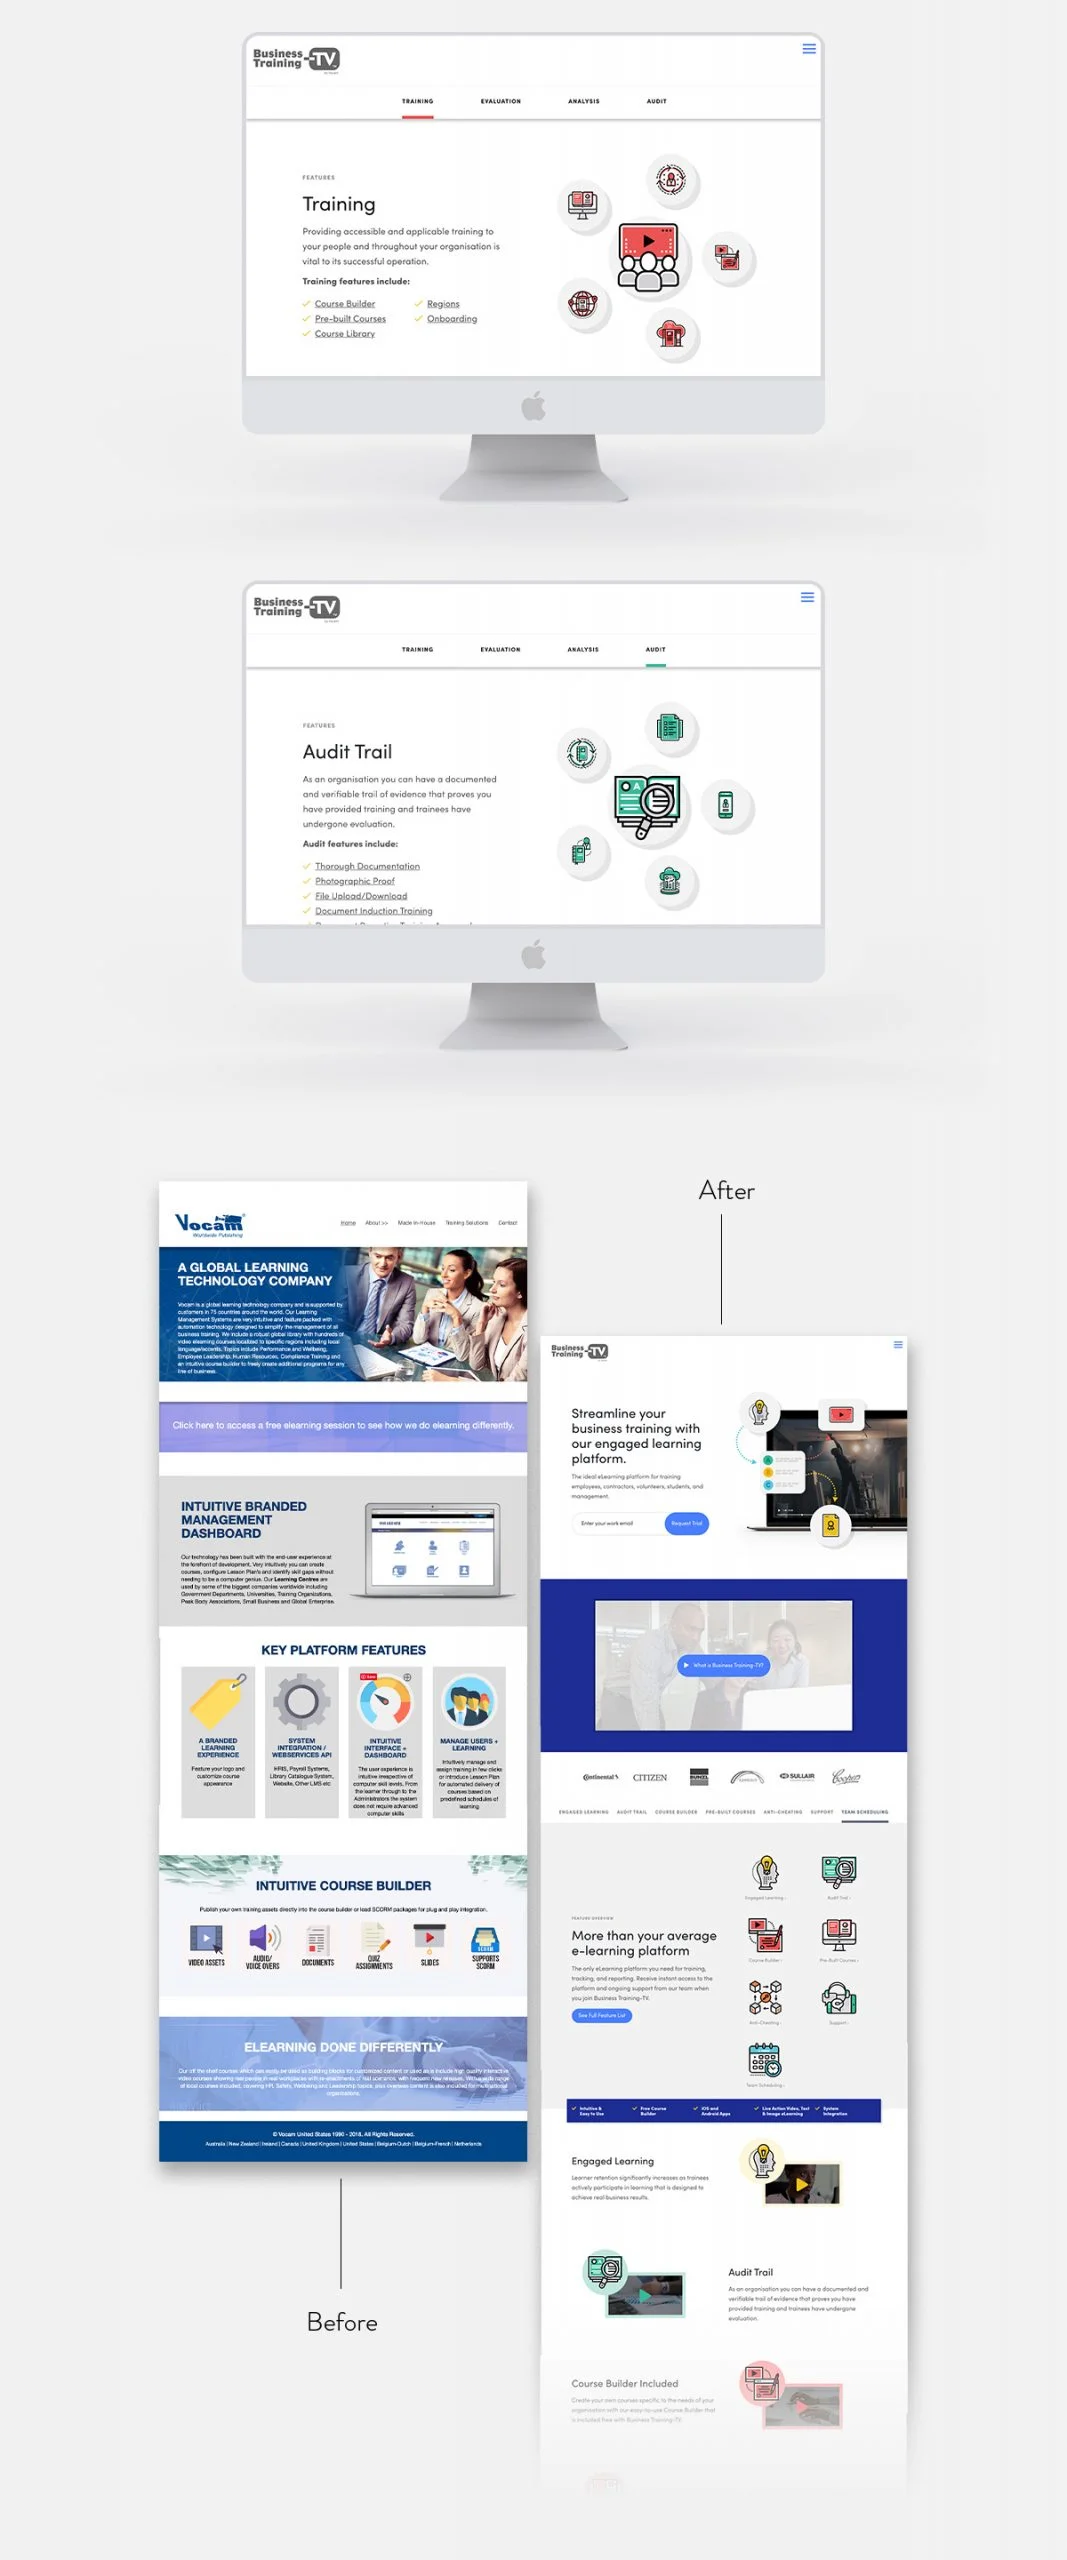 Vocam Website Design Before and After Comparisons